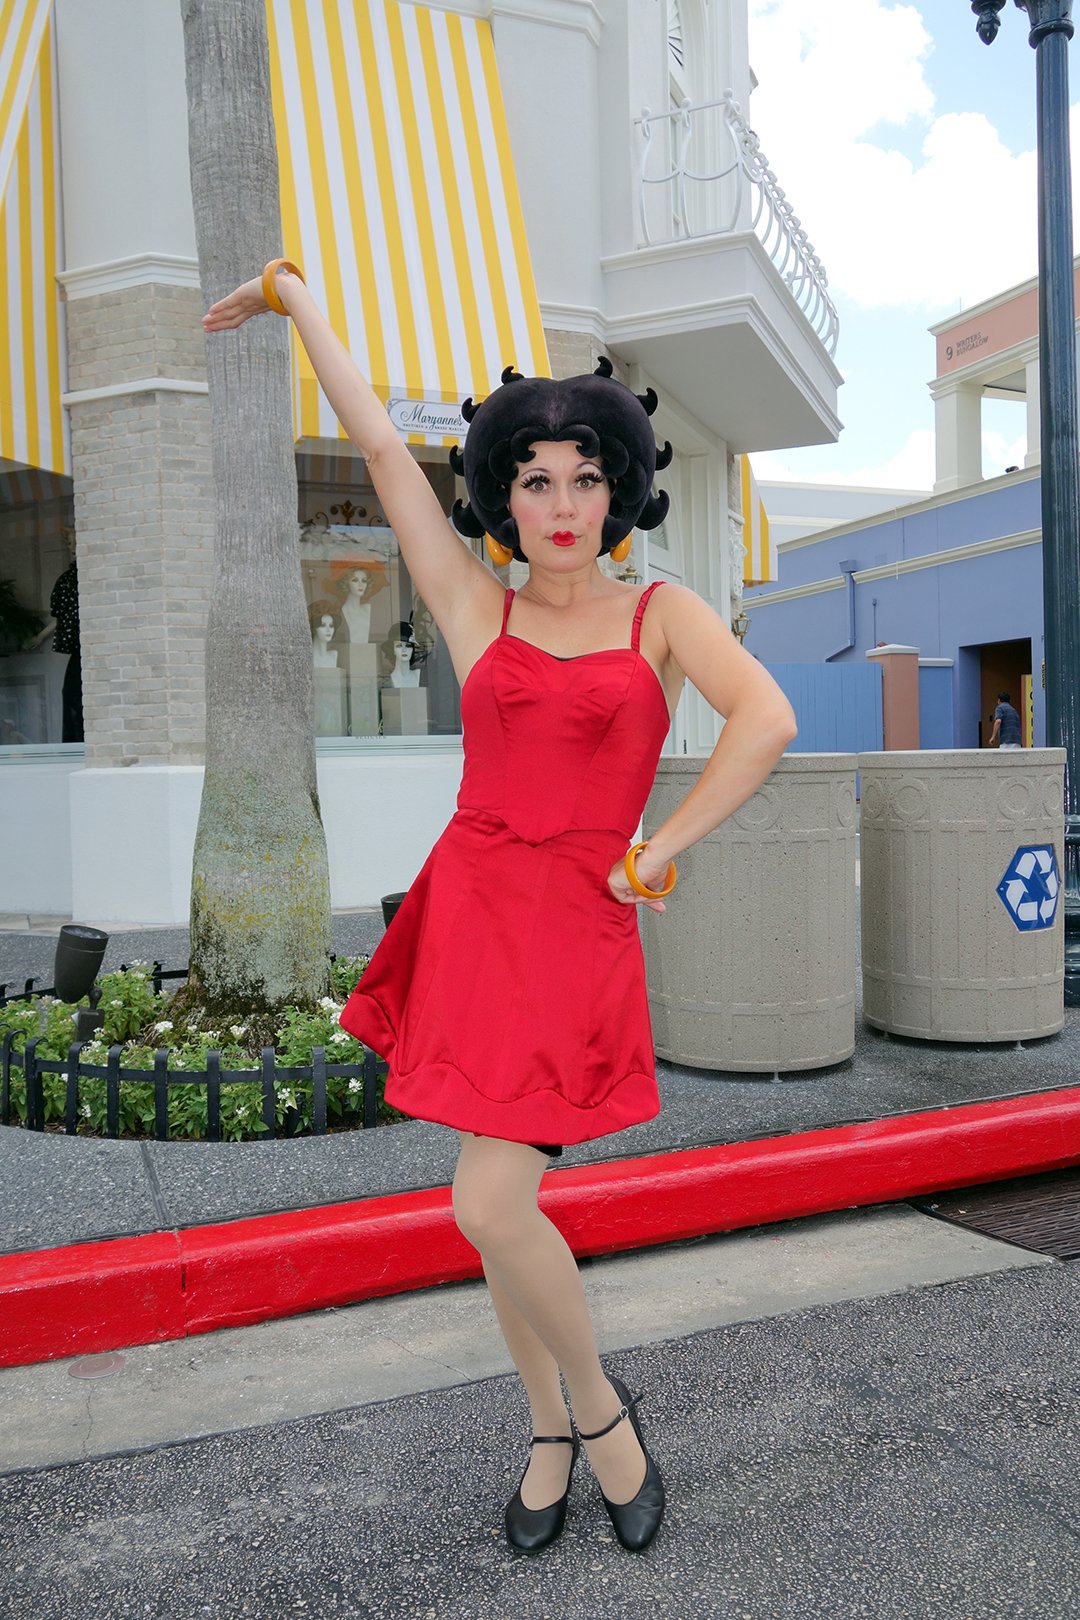 Betty Boop Universal Studios Orlando 2013